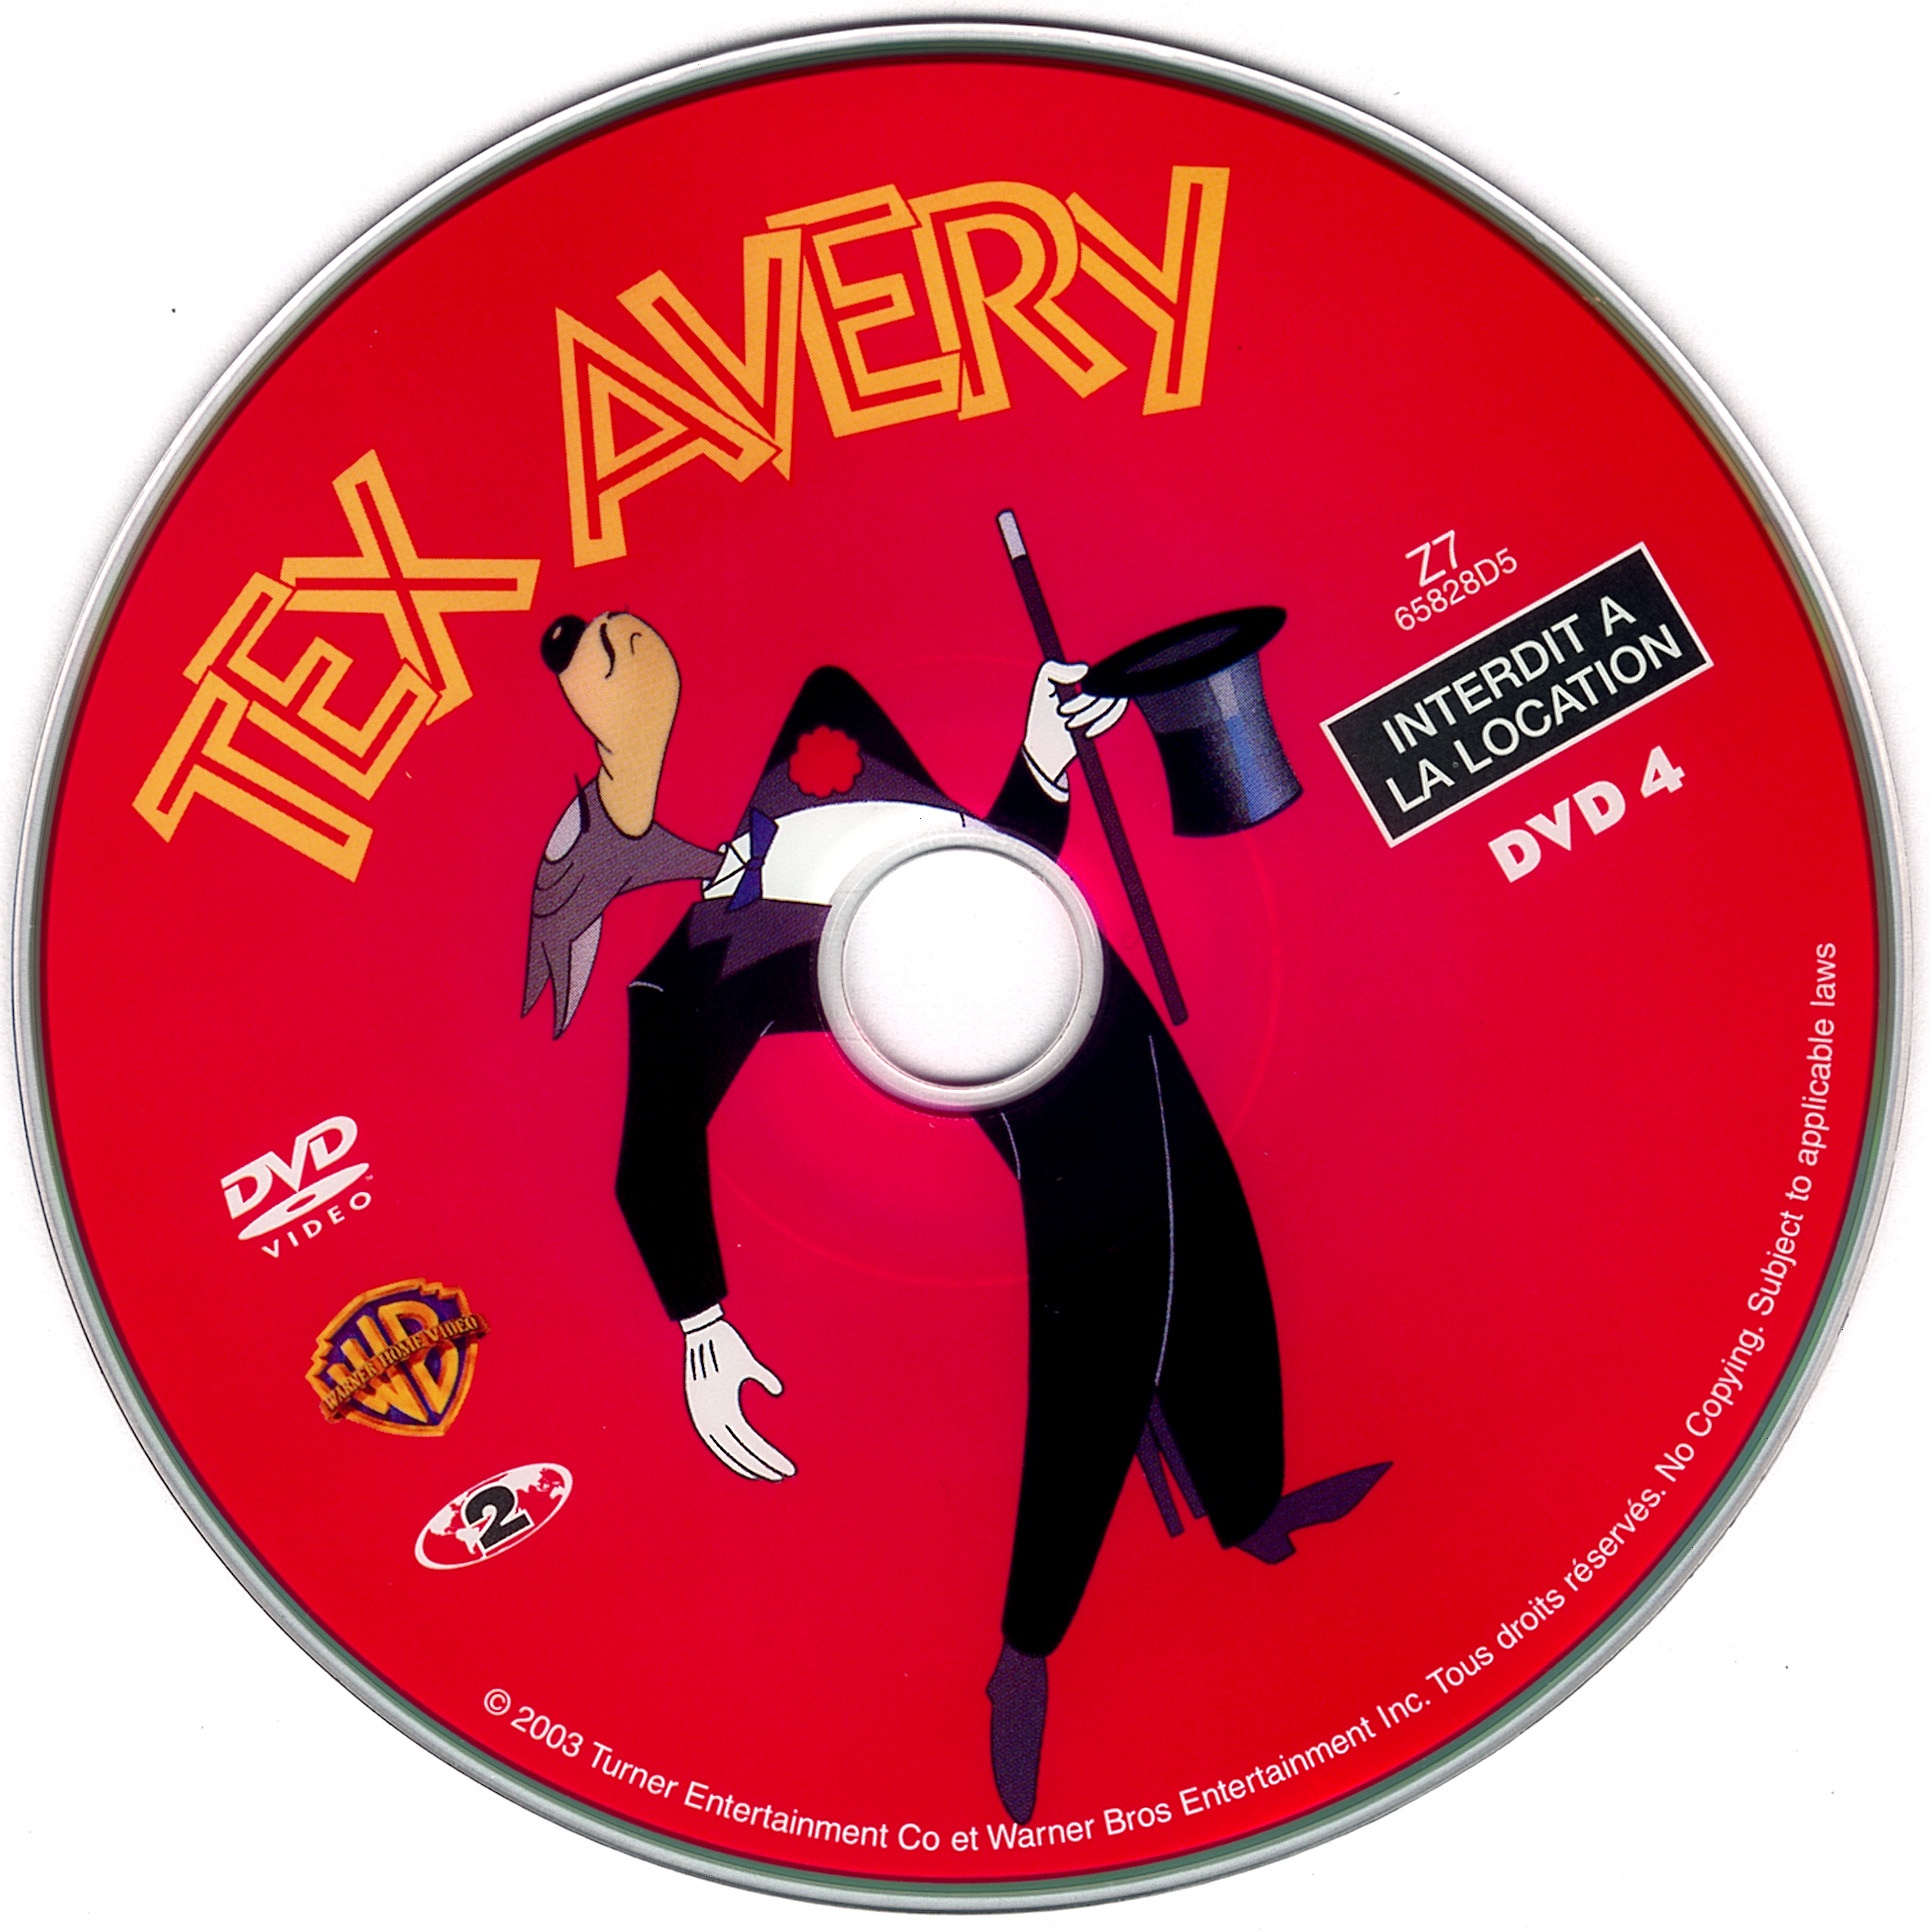 Tex Avery DVD 4